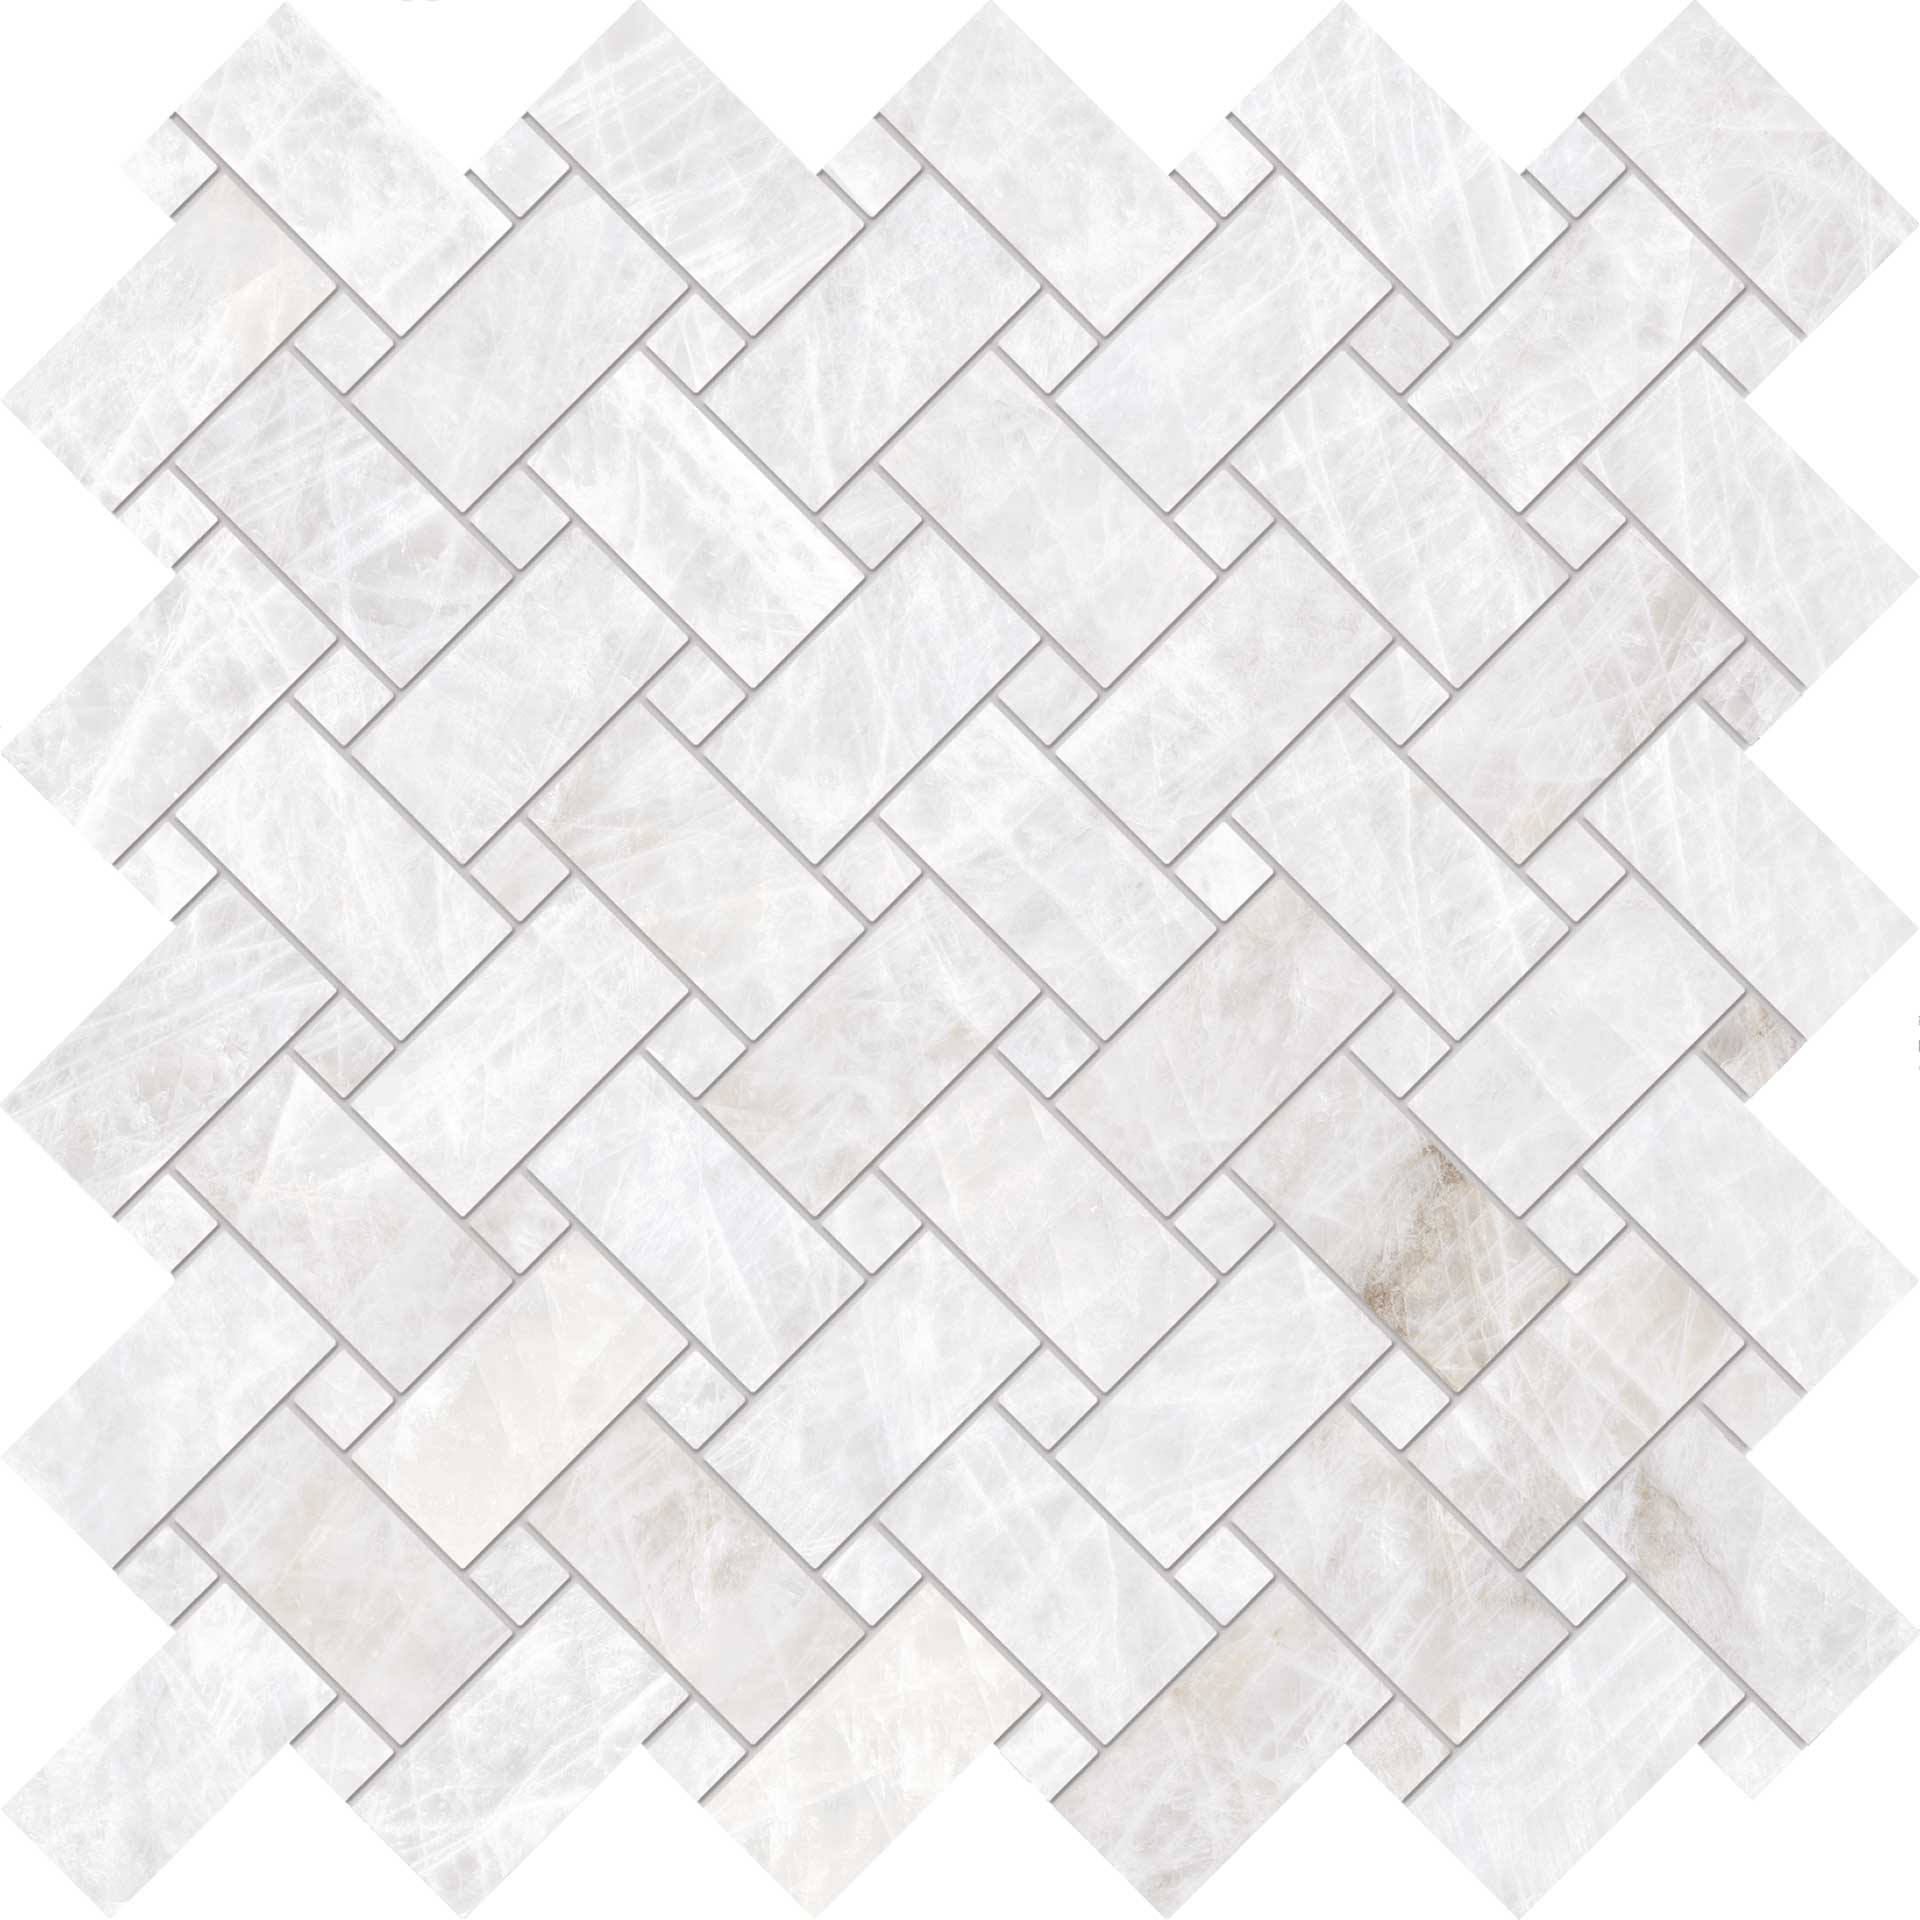 STP-Ebony-Ivory-Quarzo-Kandinsky-12x12-Sheet-Intrecci-Mosaic